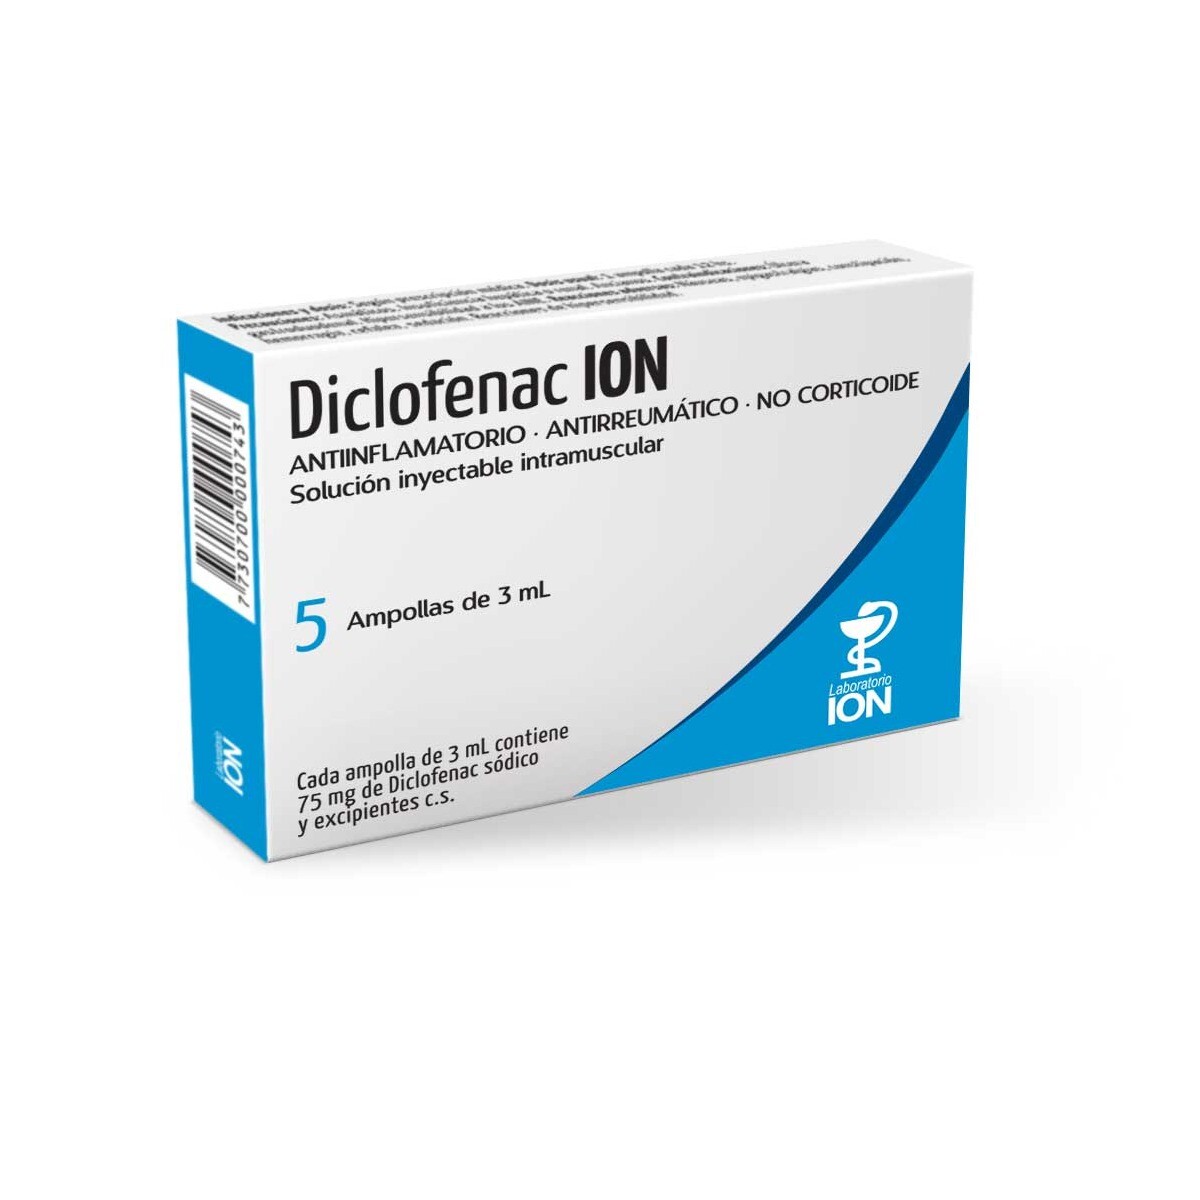 Diclofenac Iny 3ml. 5 Ampollas 